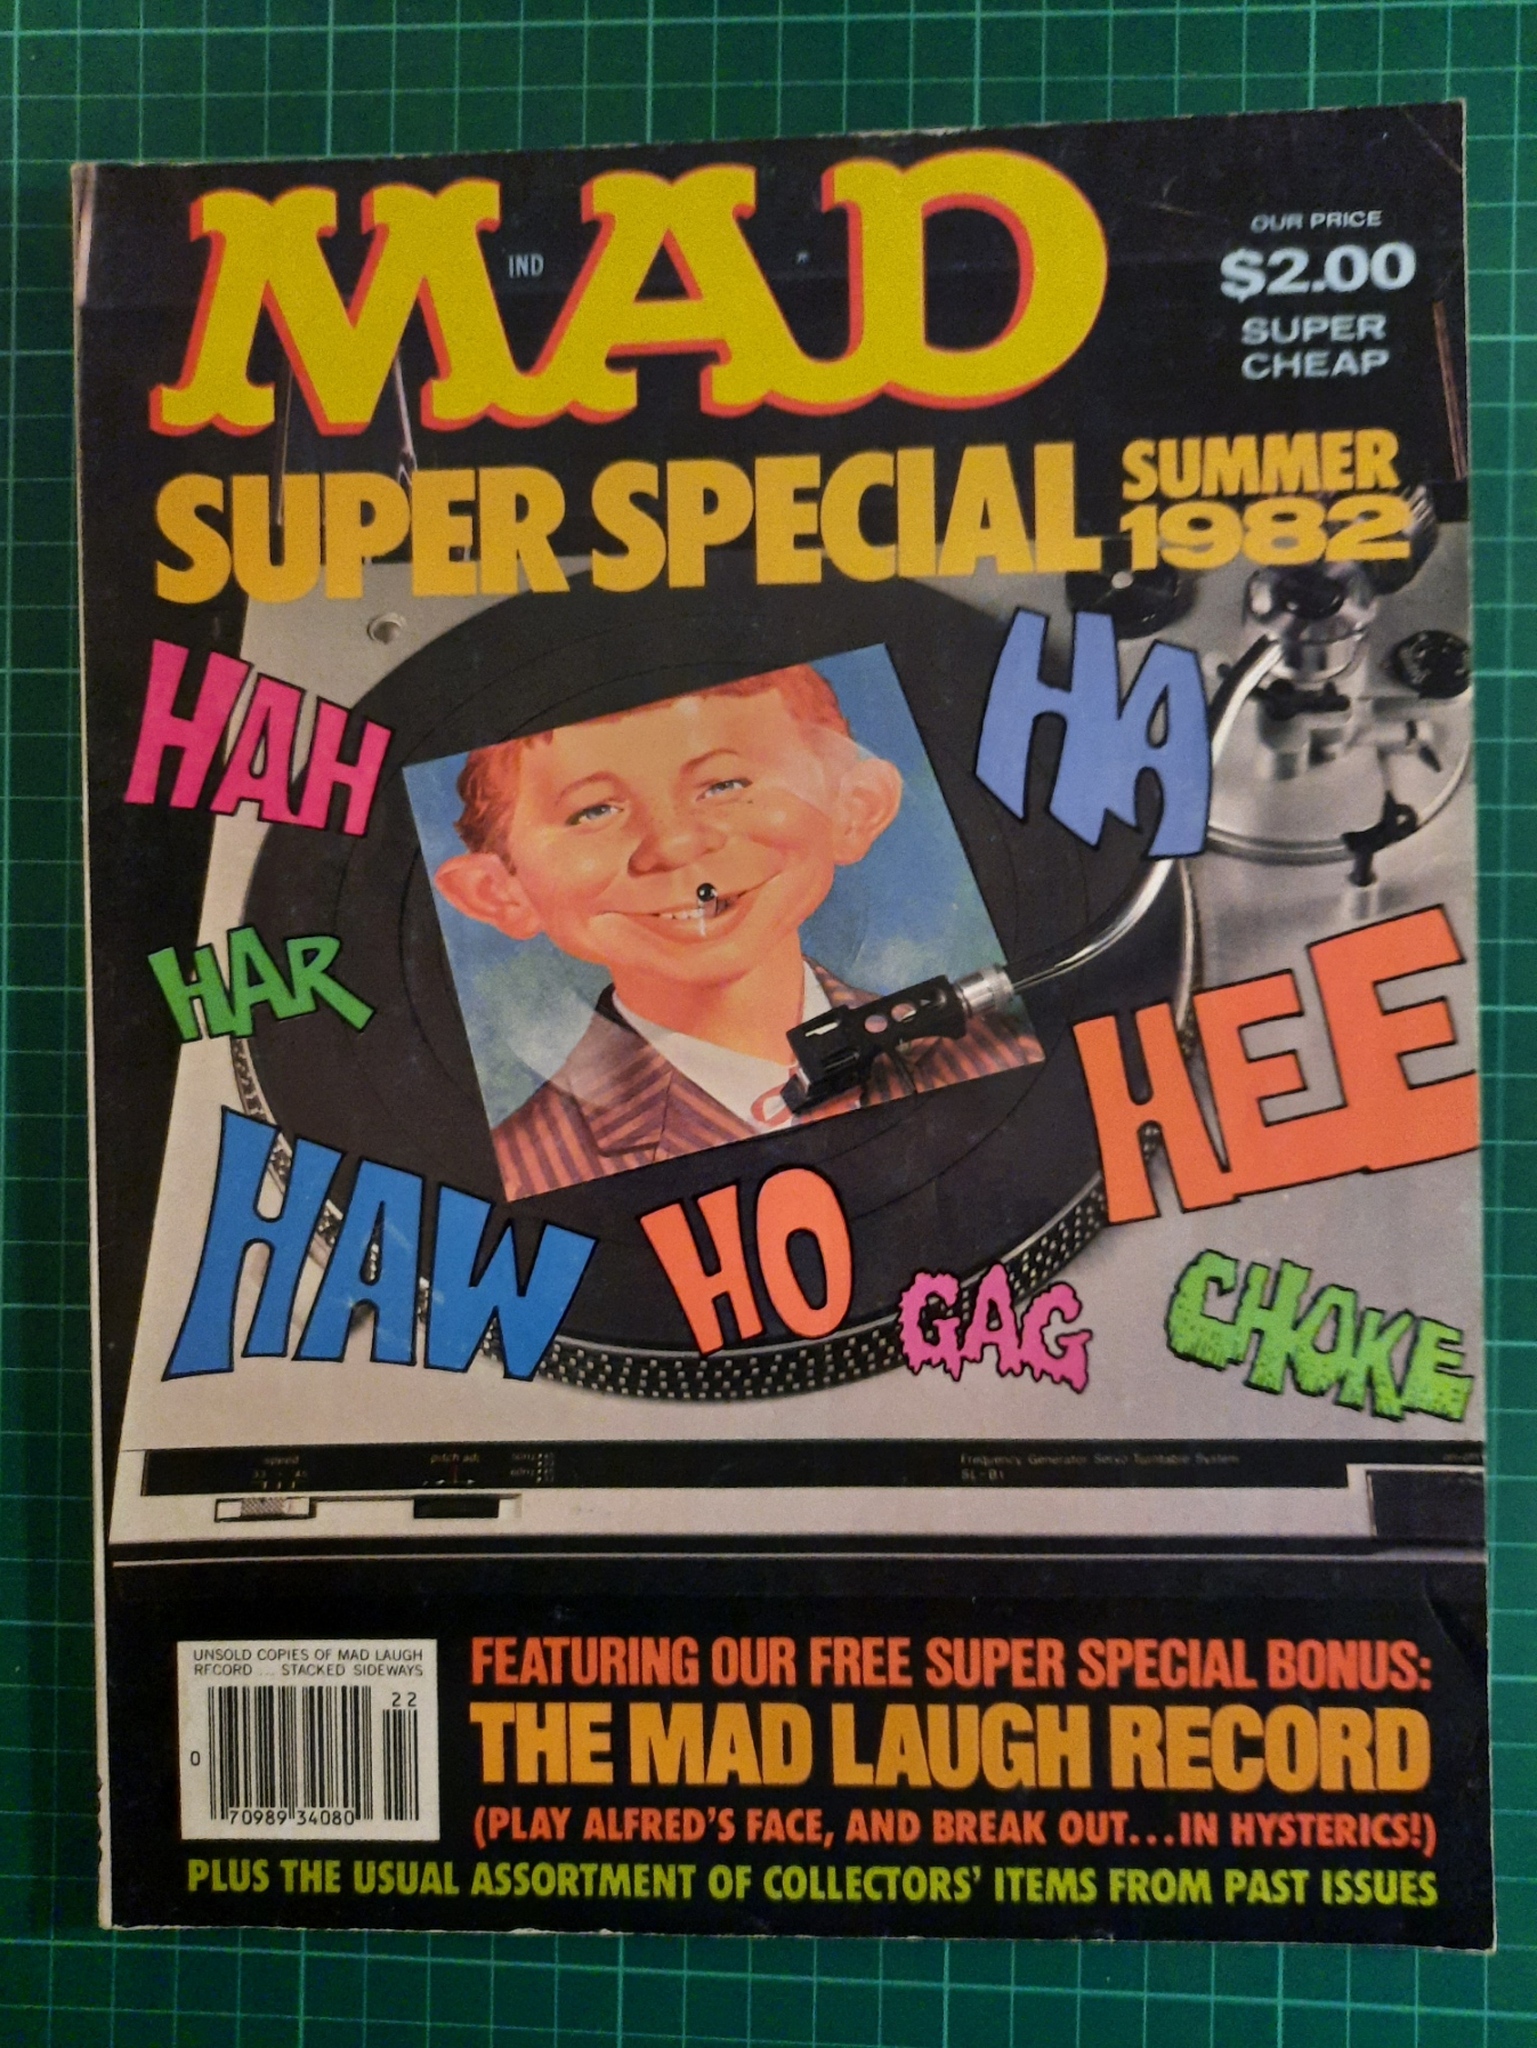 USA Mad Super Special Summer 1982